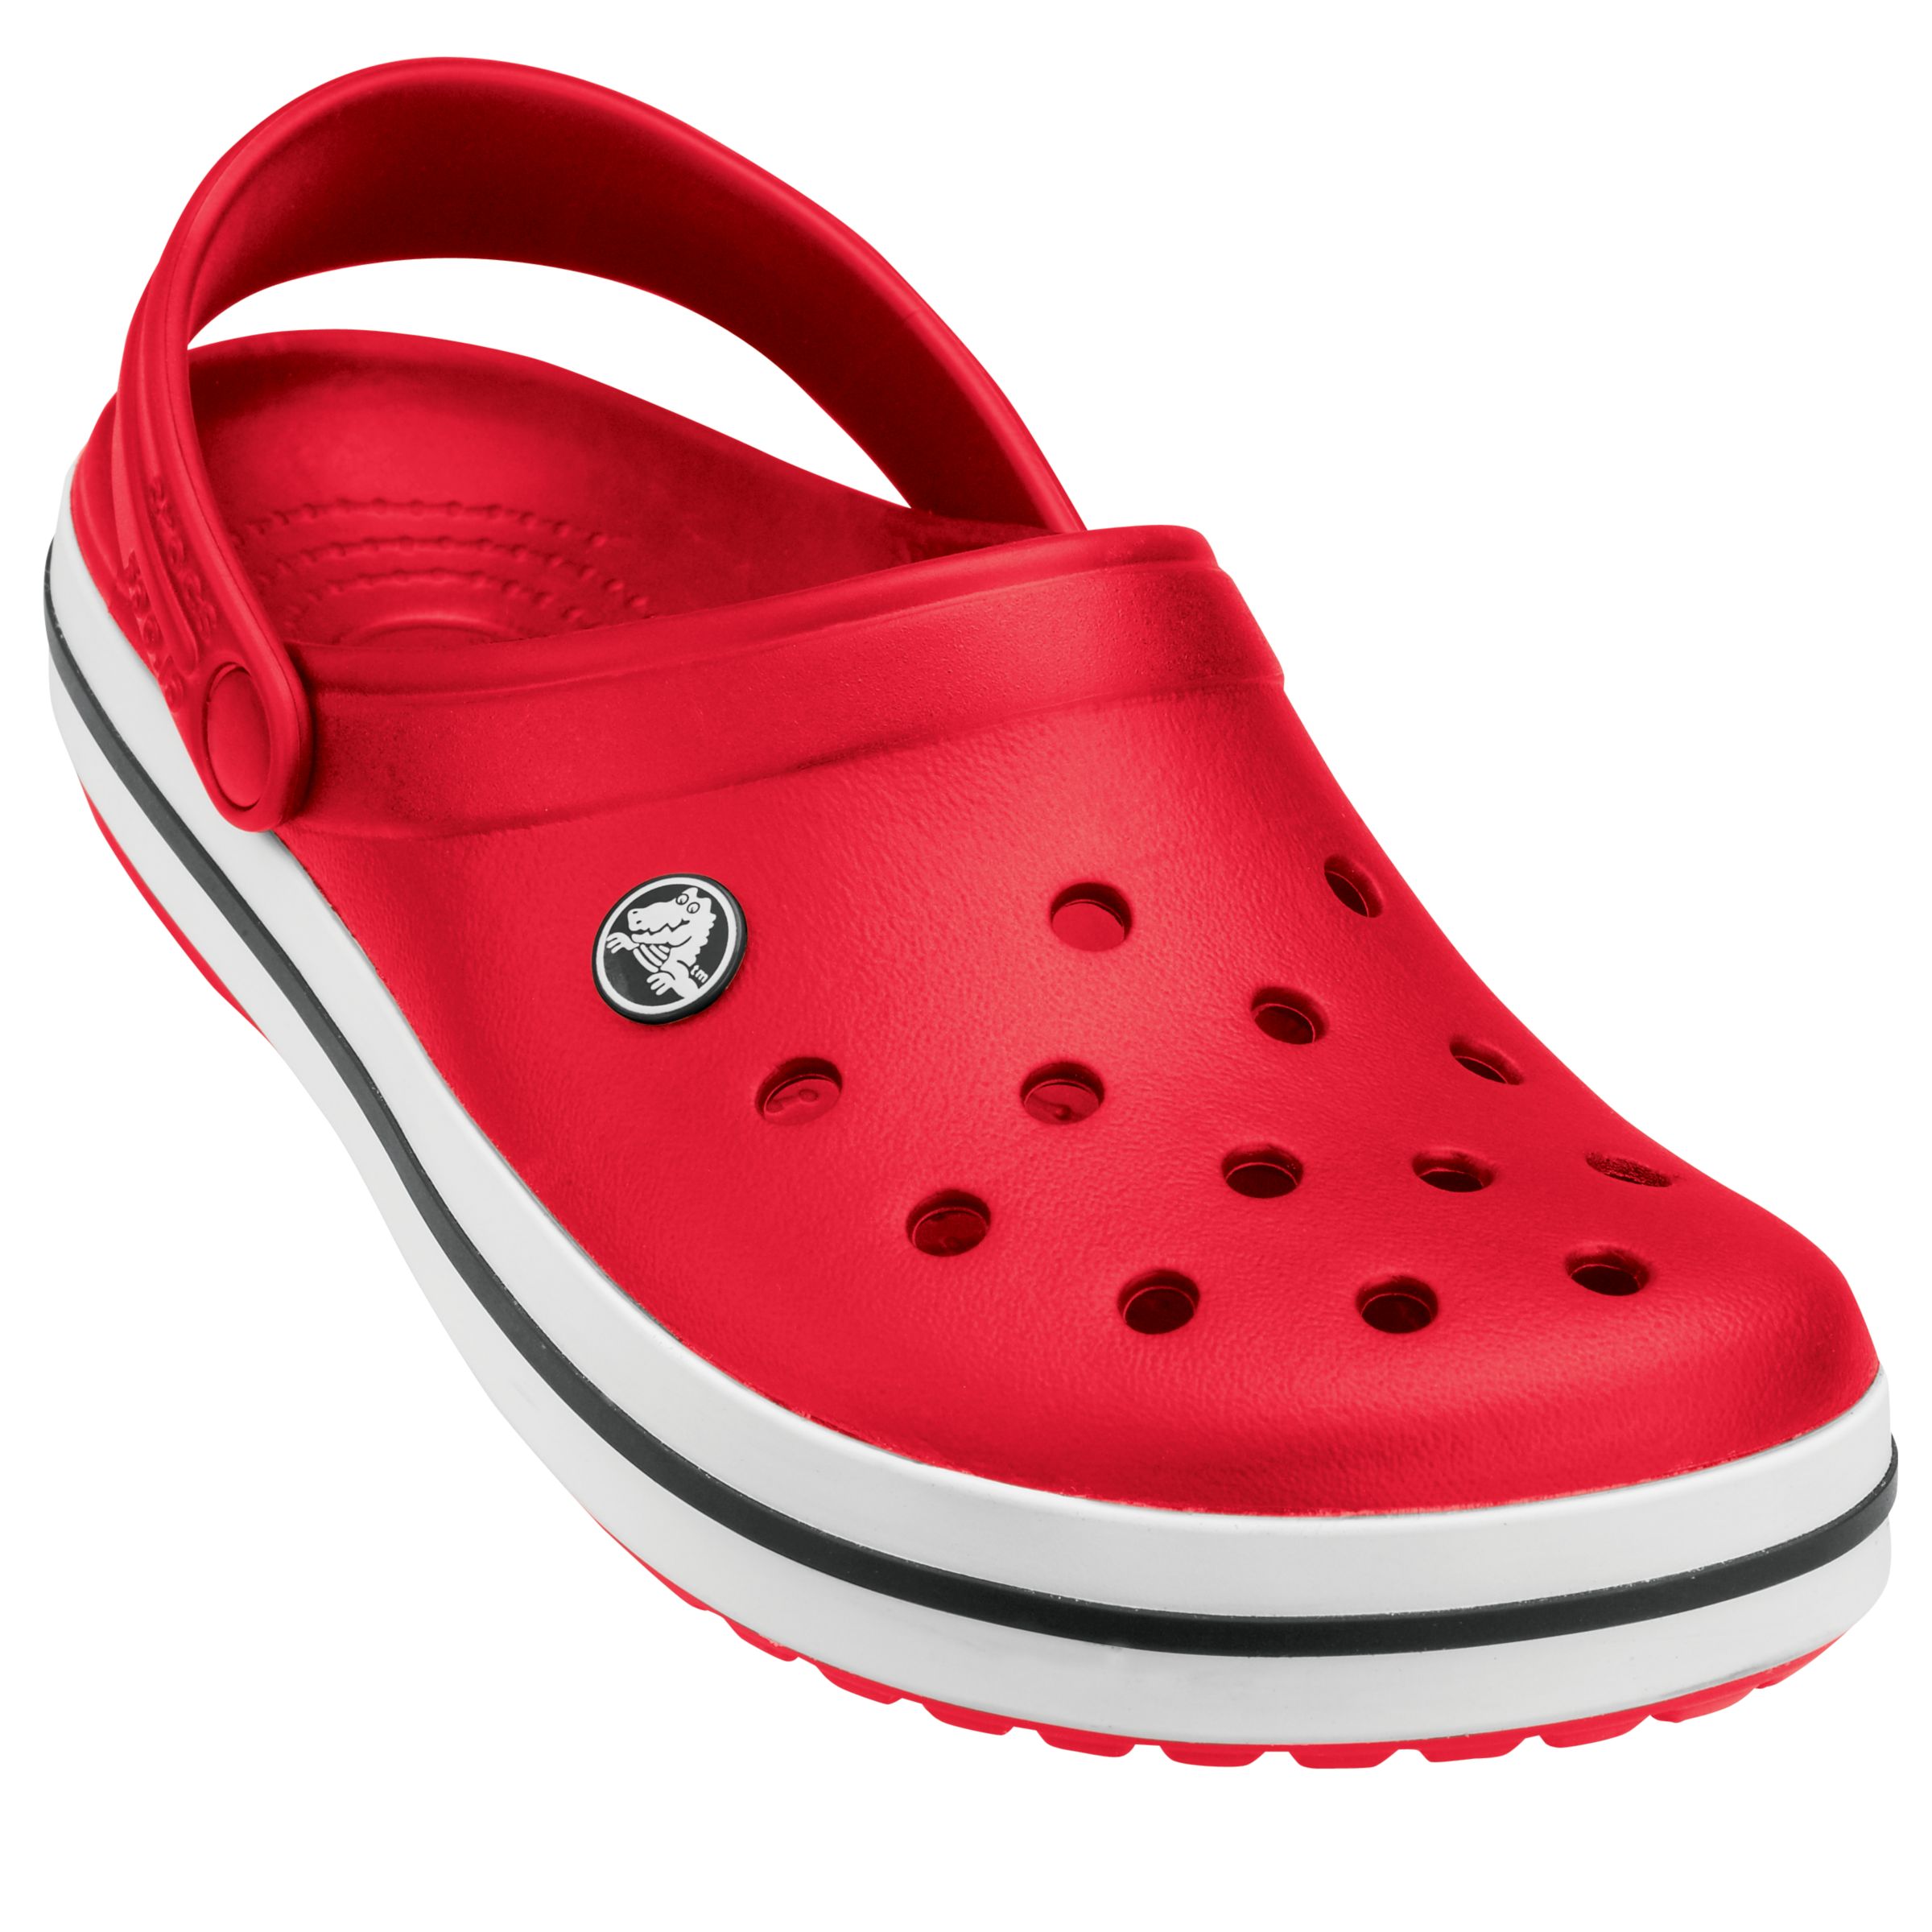 Crocband Sandals, Red 362575